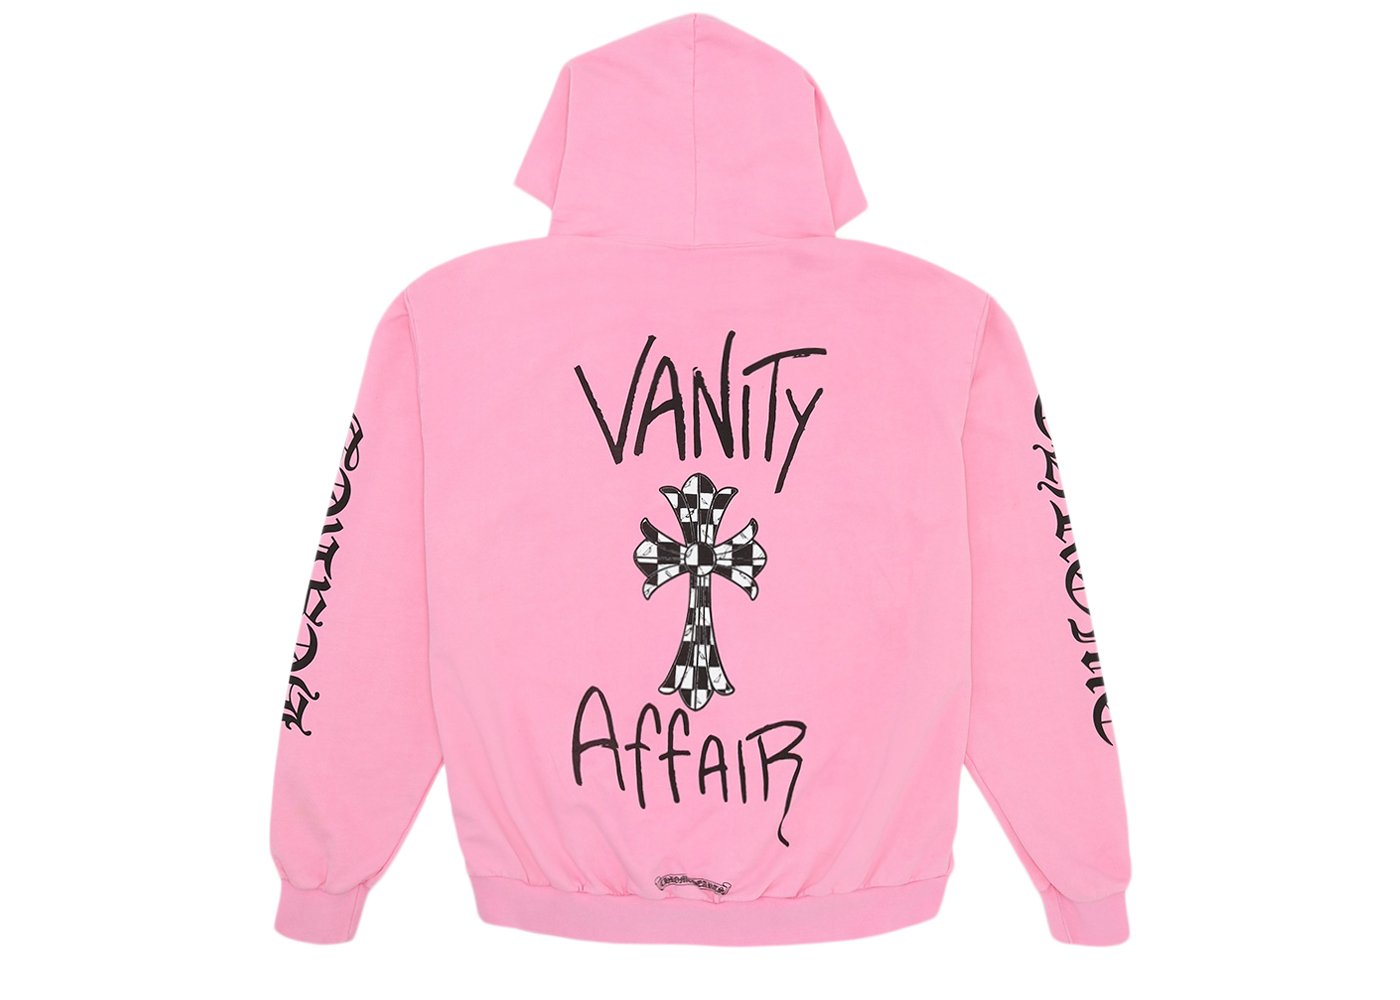 Chrome Hearts Matty Boy Vanity Affair Hoodie Pink streetwear